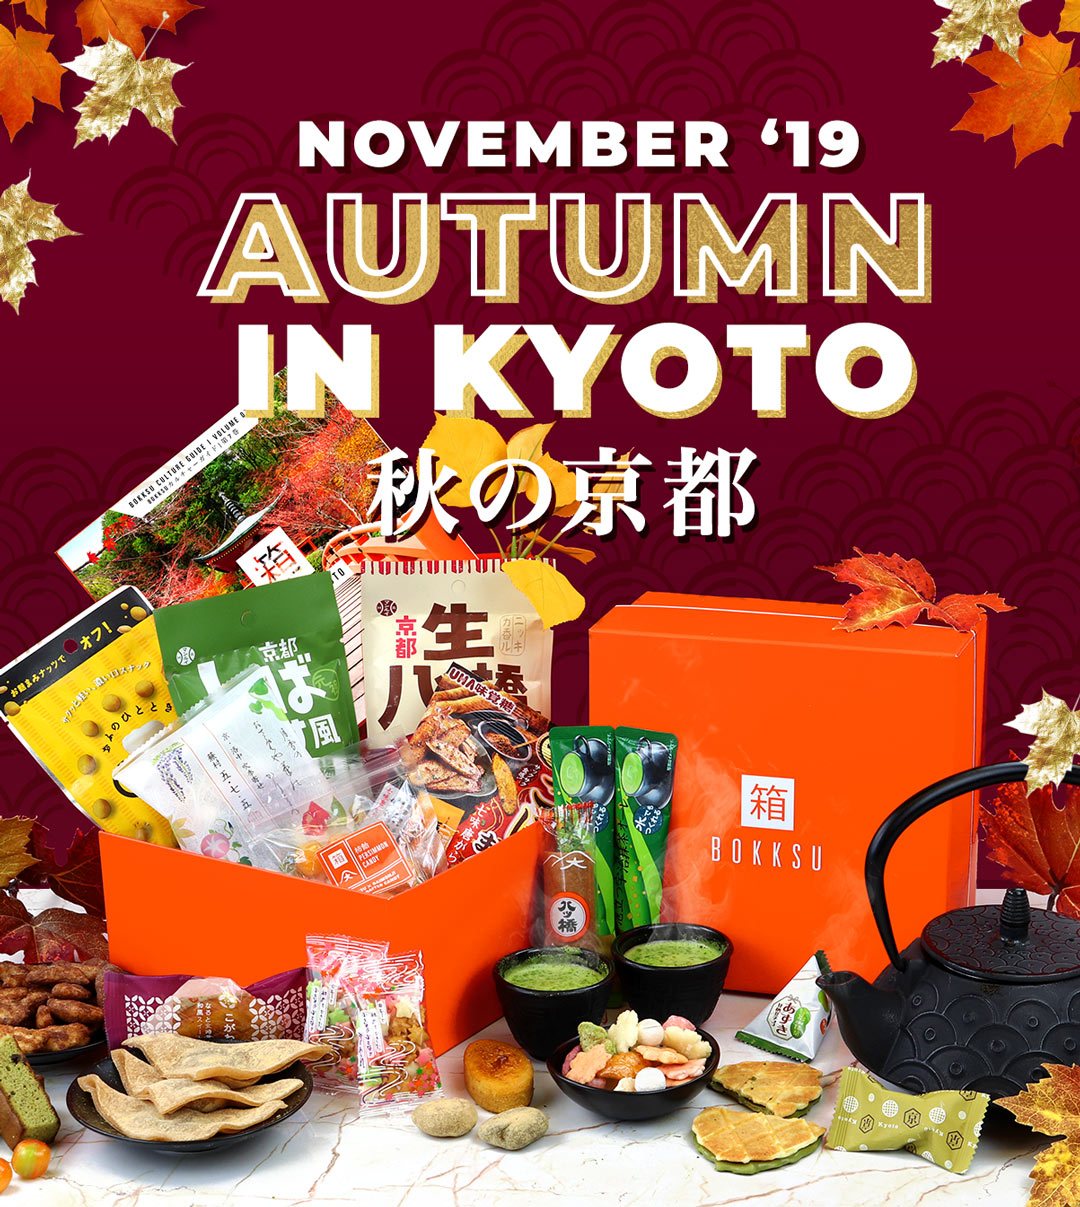 November '19 Classic Bokksu: Autumn in Kyoto